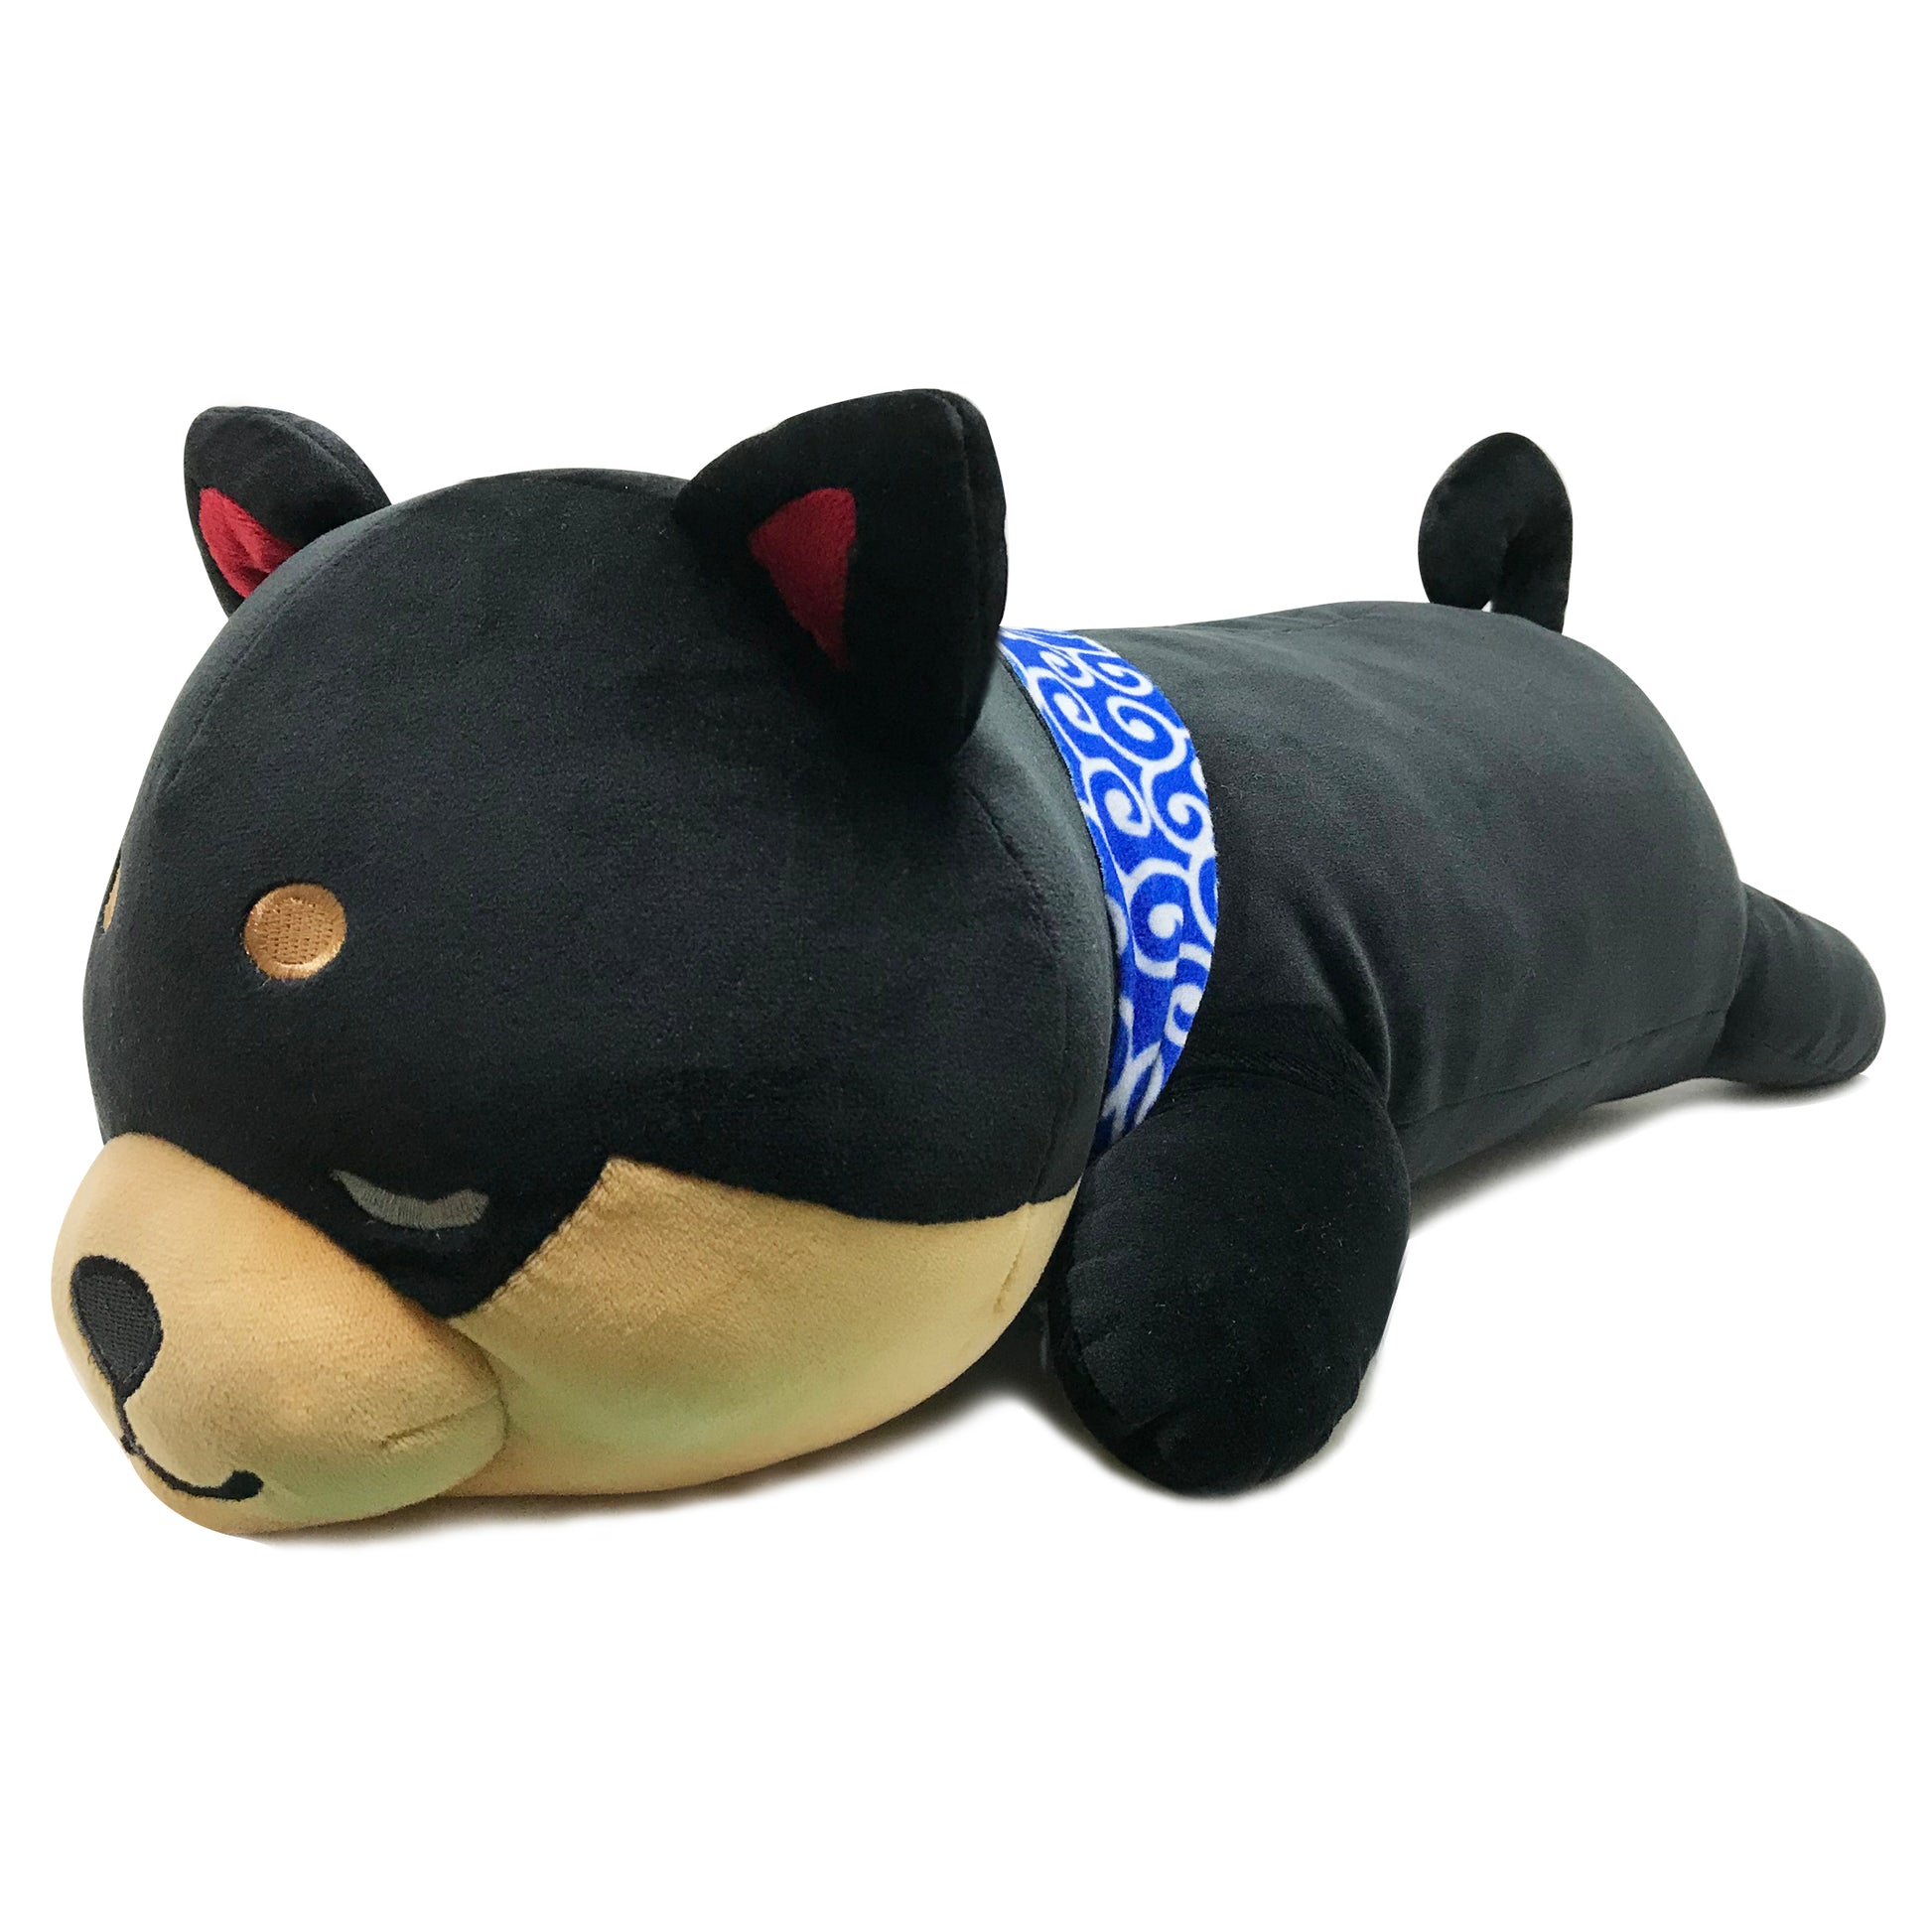 Shiba Inu Dog Keychain Cute Stuffed Animal Toy Mameshiba – e